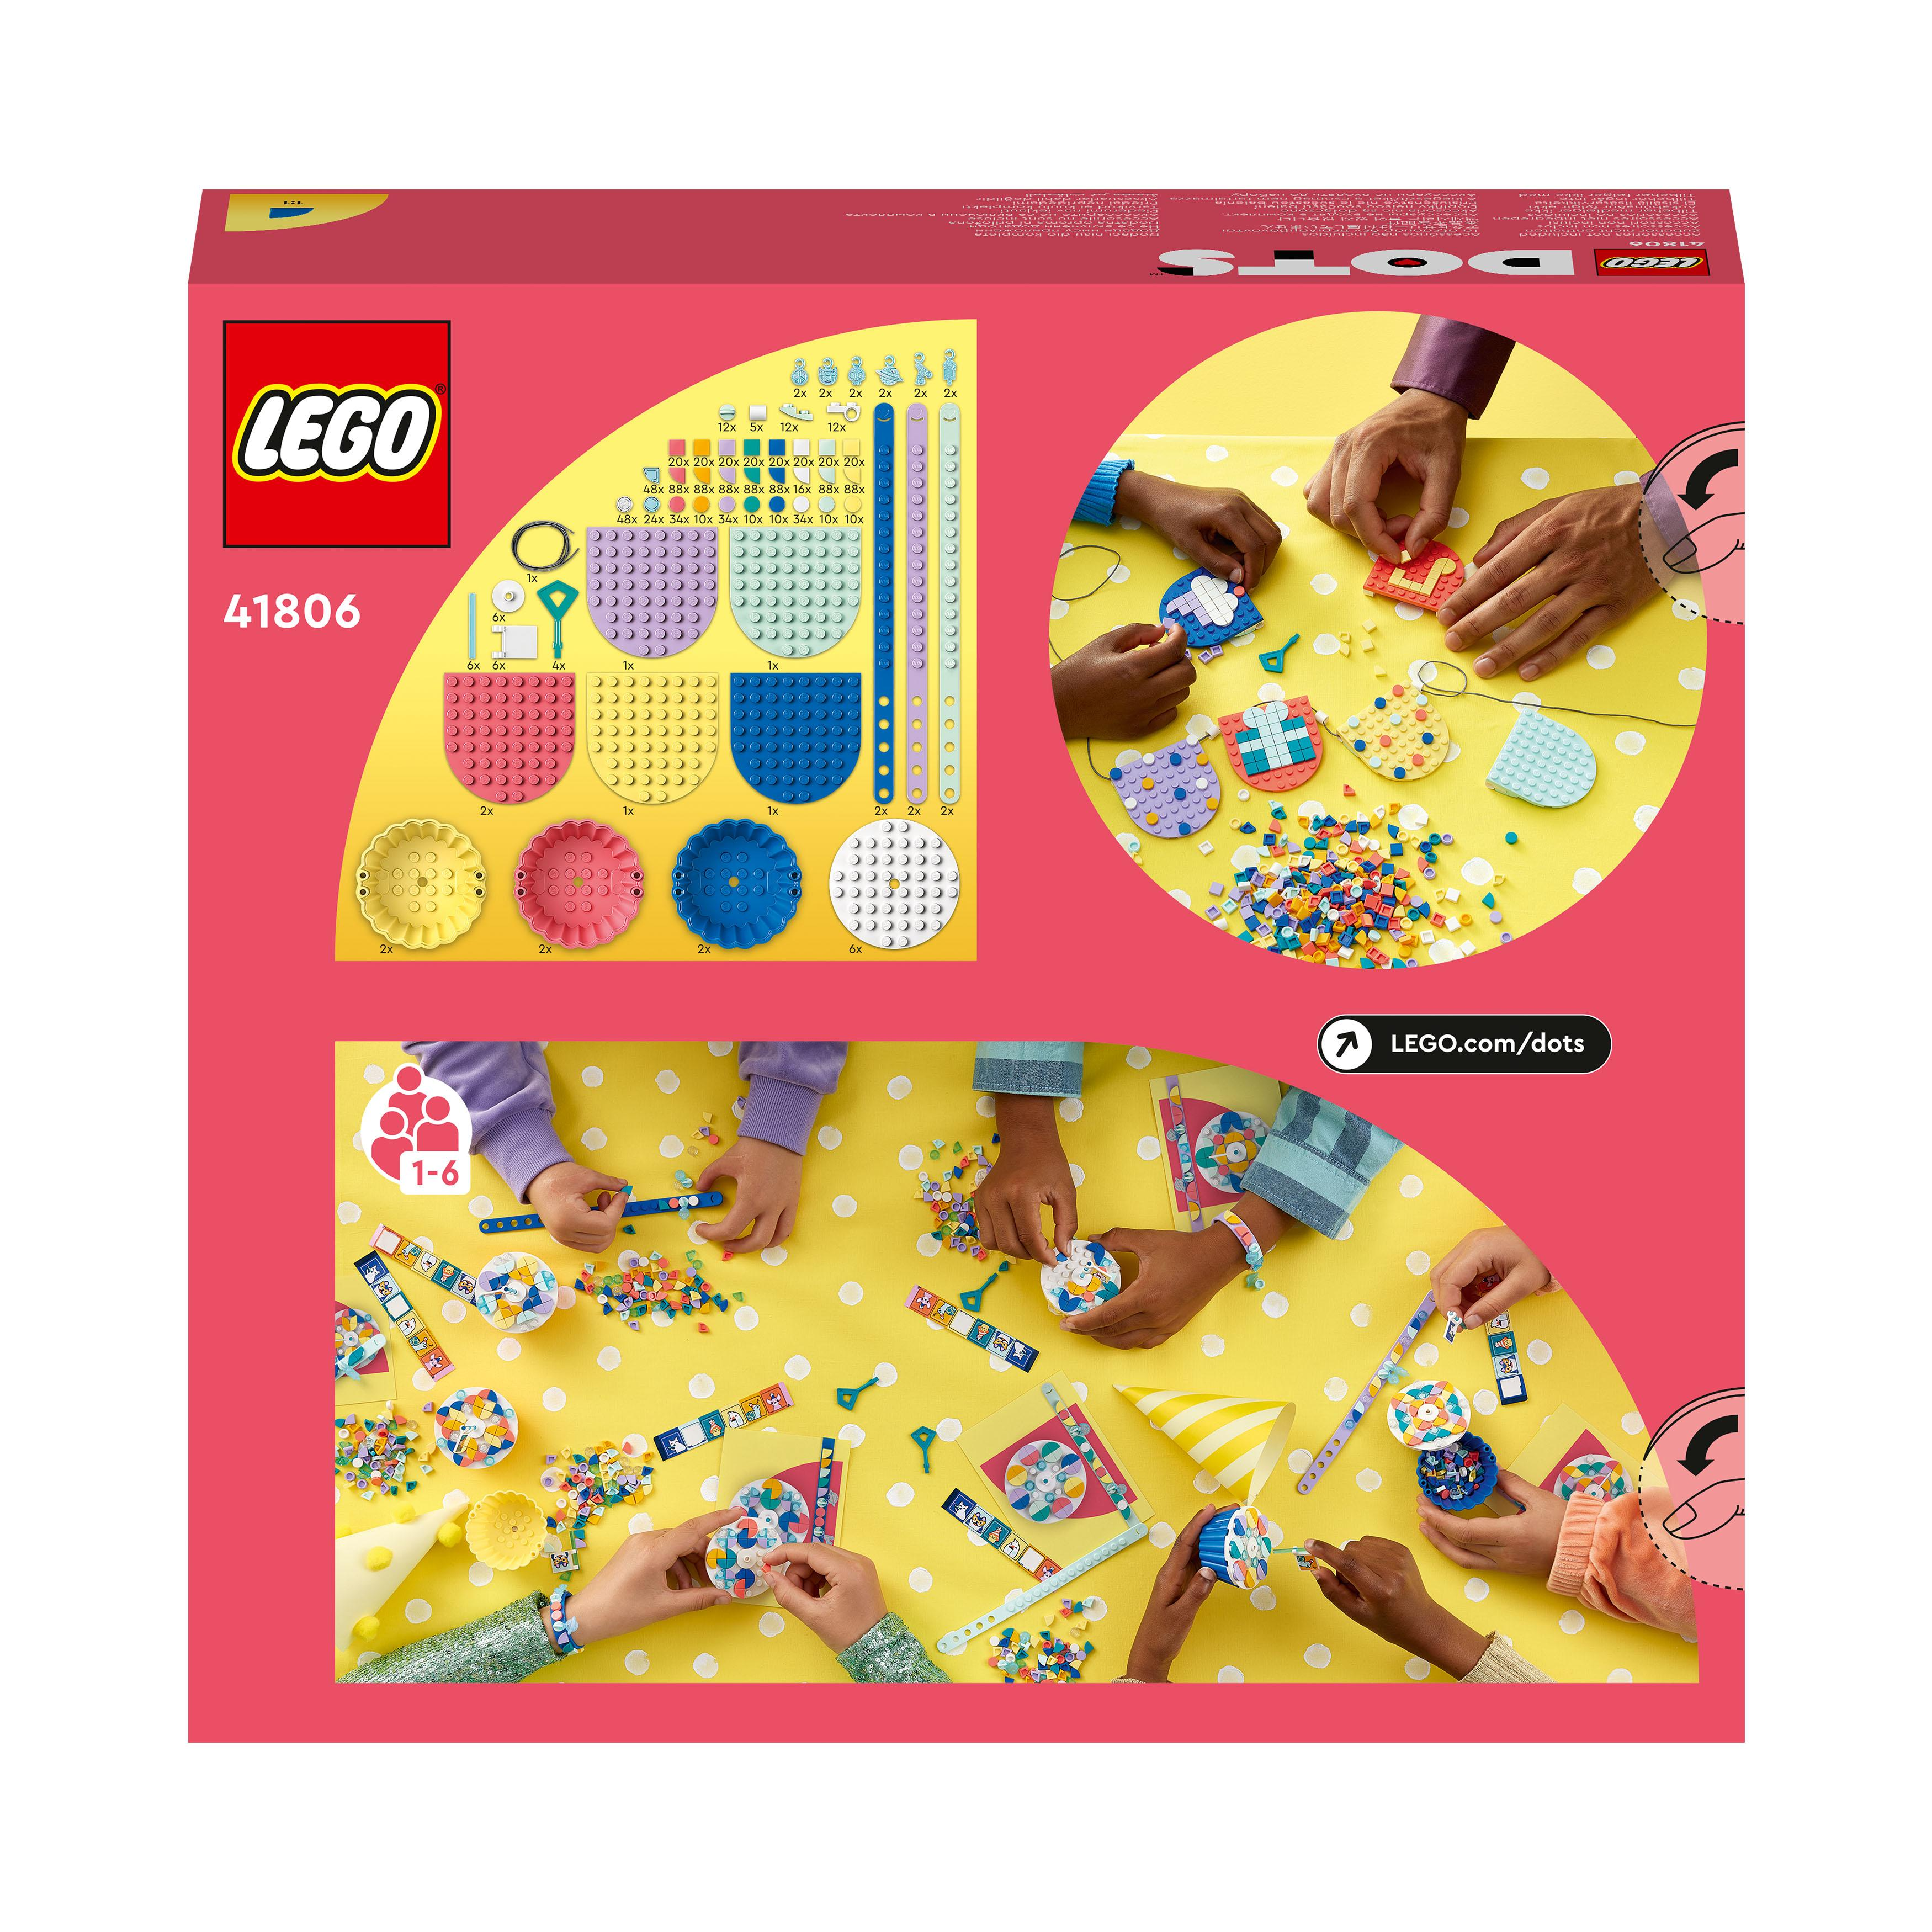 Ultimatives Partyset Mehrfarbig 41806 DOTS LEGO Bausatz,